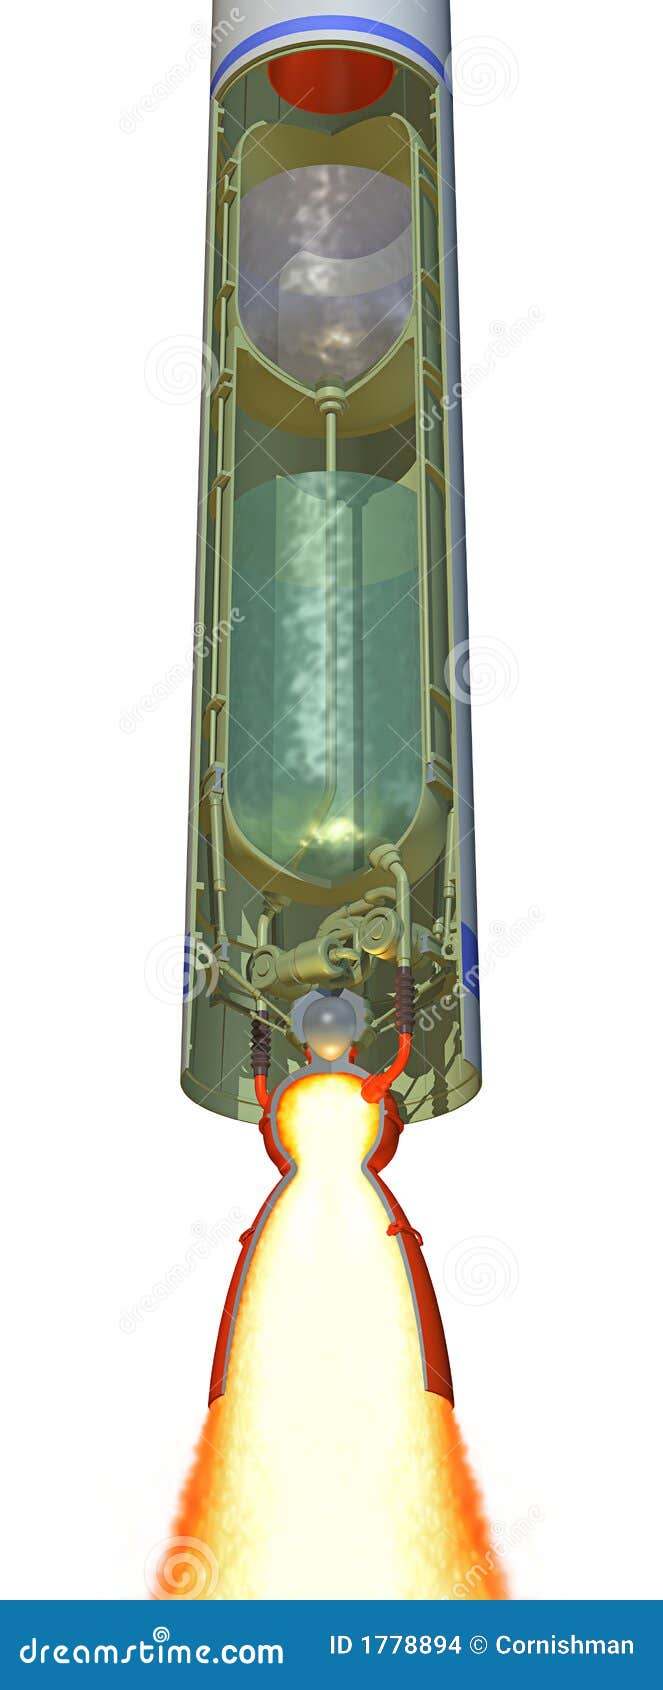 Rocket Stage Cutaway stock illustration. Illustration of ... missile engine diagram 